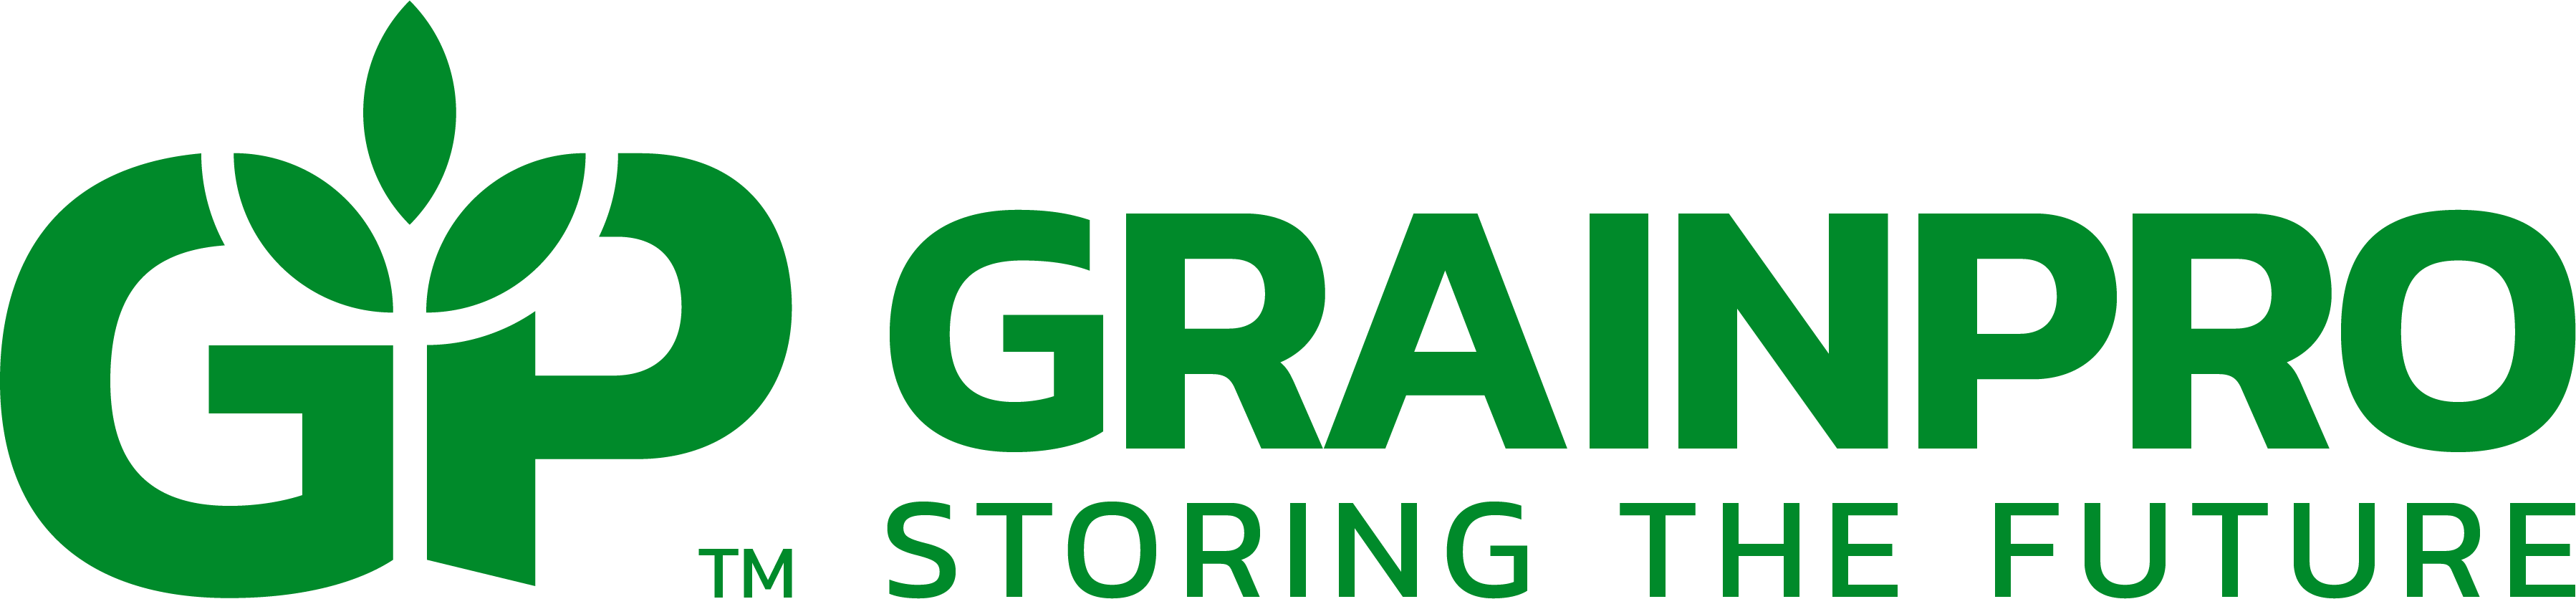 Quite Green Bubble Logo - Post Harvest Handling & Storage Solutions for Grains & Beans | GrainPro